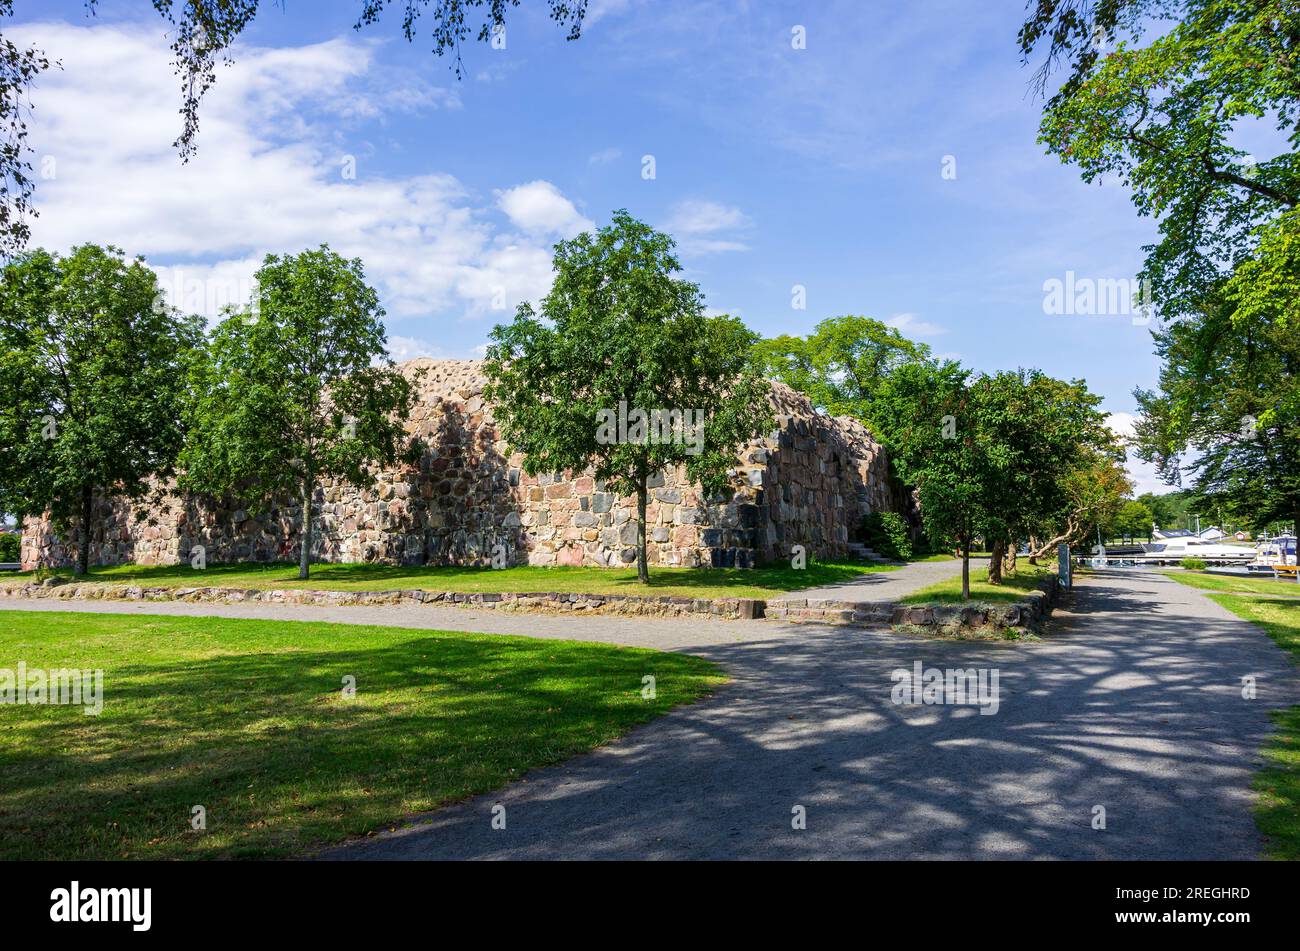 Resti delle rovine del castello di Stegeholm (Stegeholms slottsruin) su Slottsholmen a Västervik, Smaland, Kalmar län, Svezia. Foto Stock